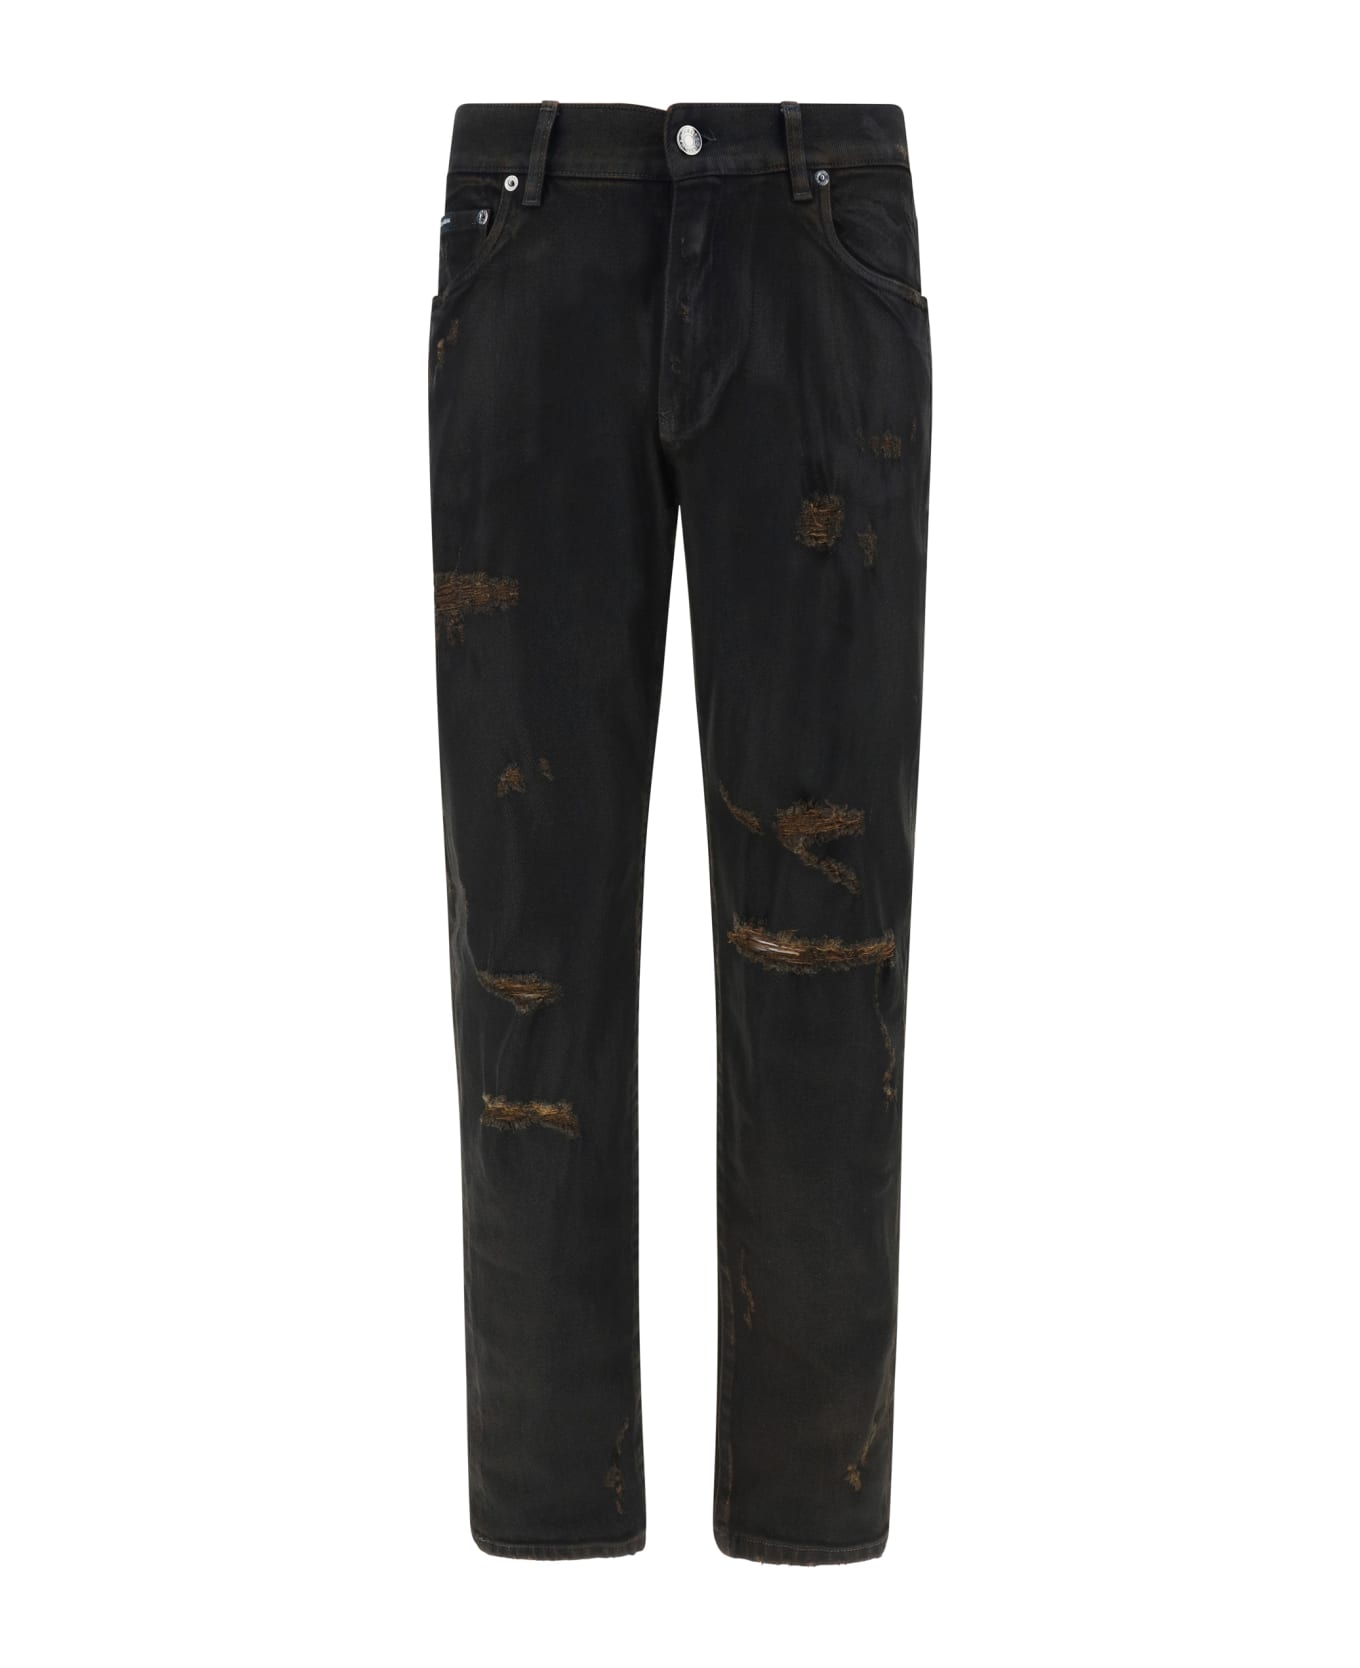 Dolce & Gabbana Slim Fit Jeans - Variante Abbinata